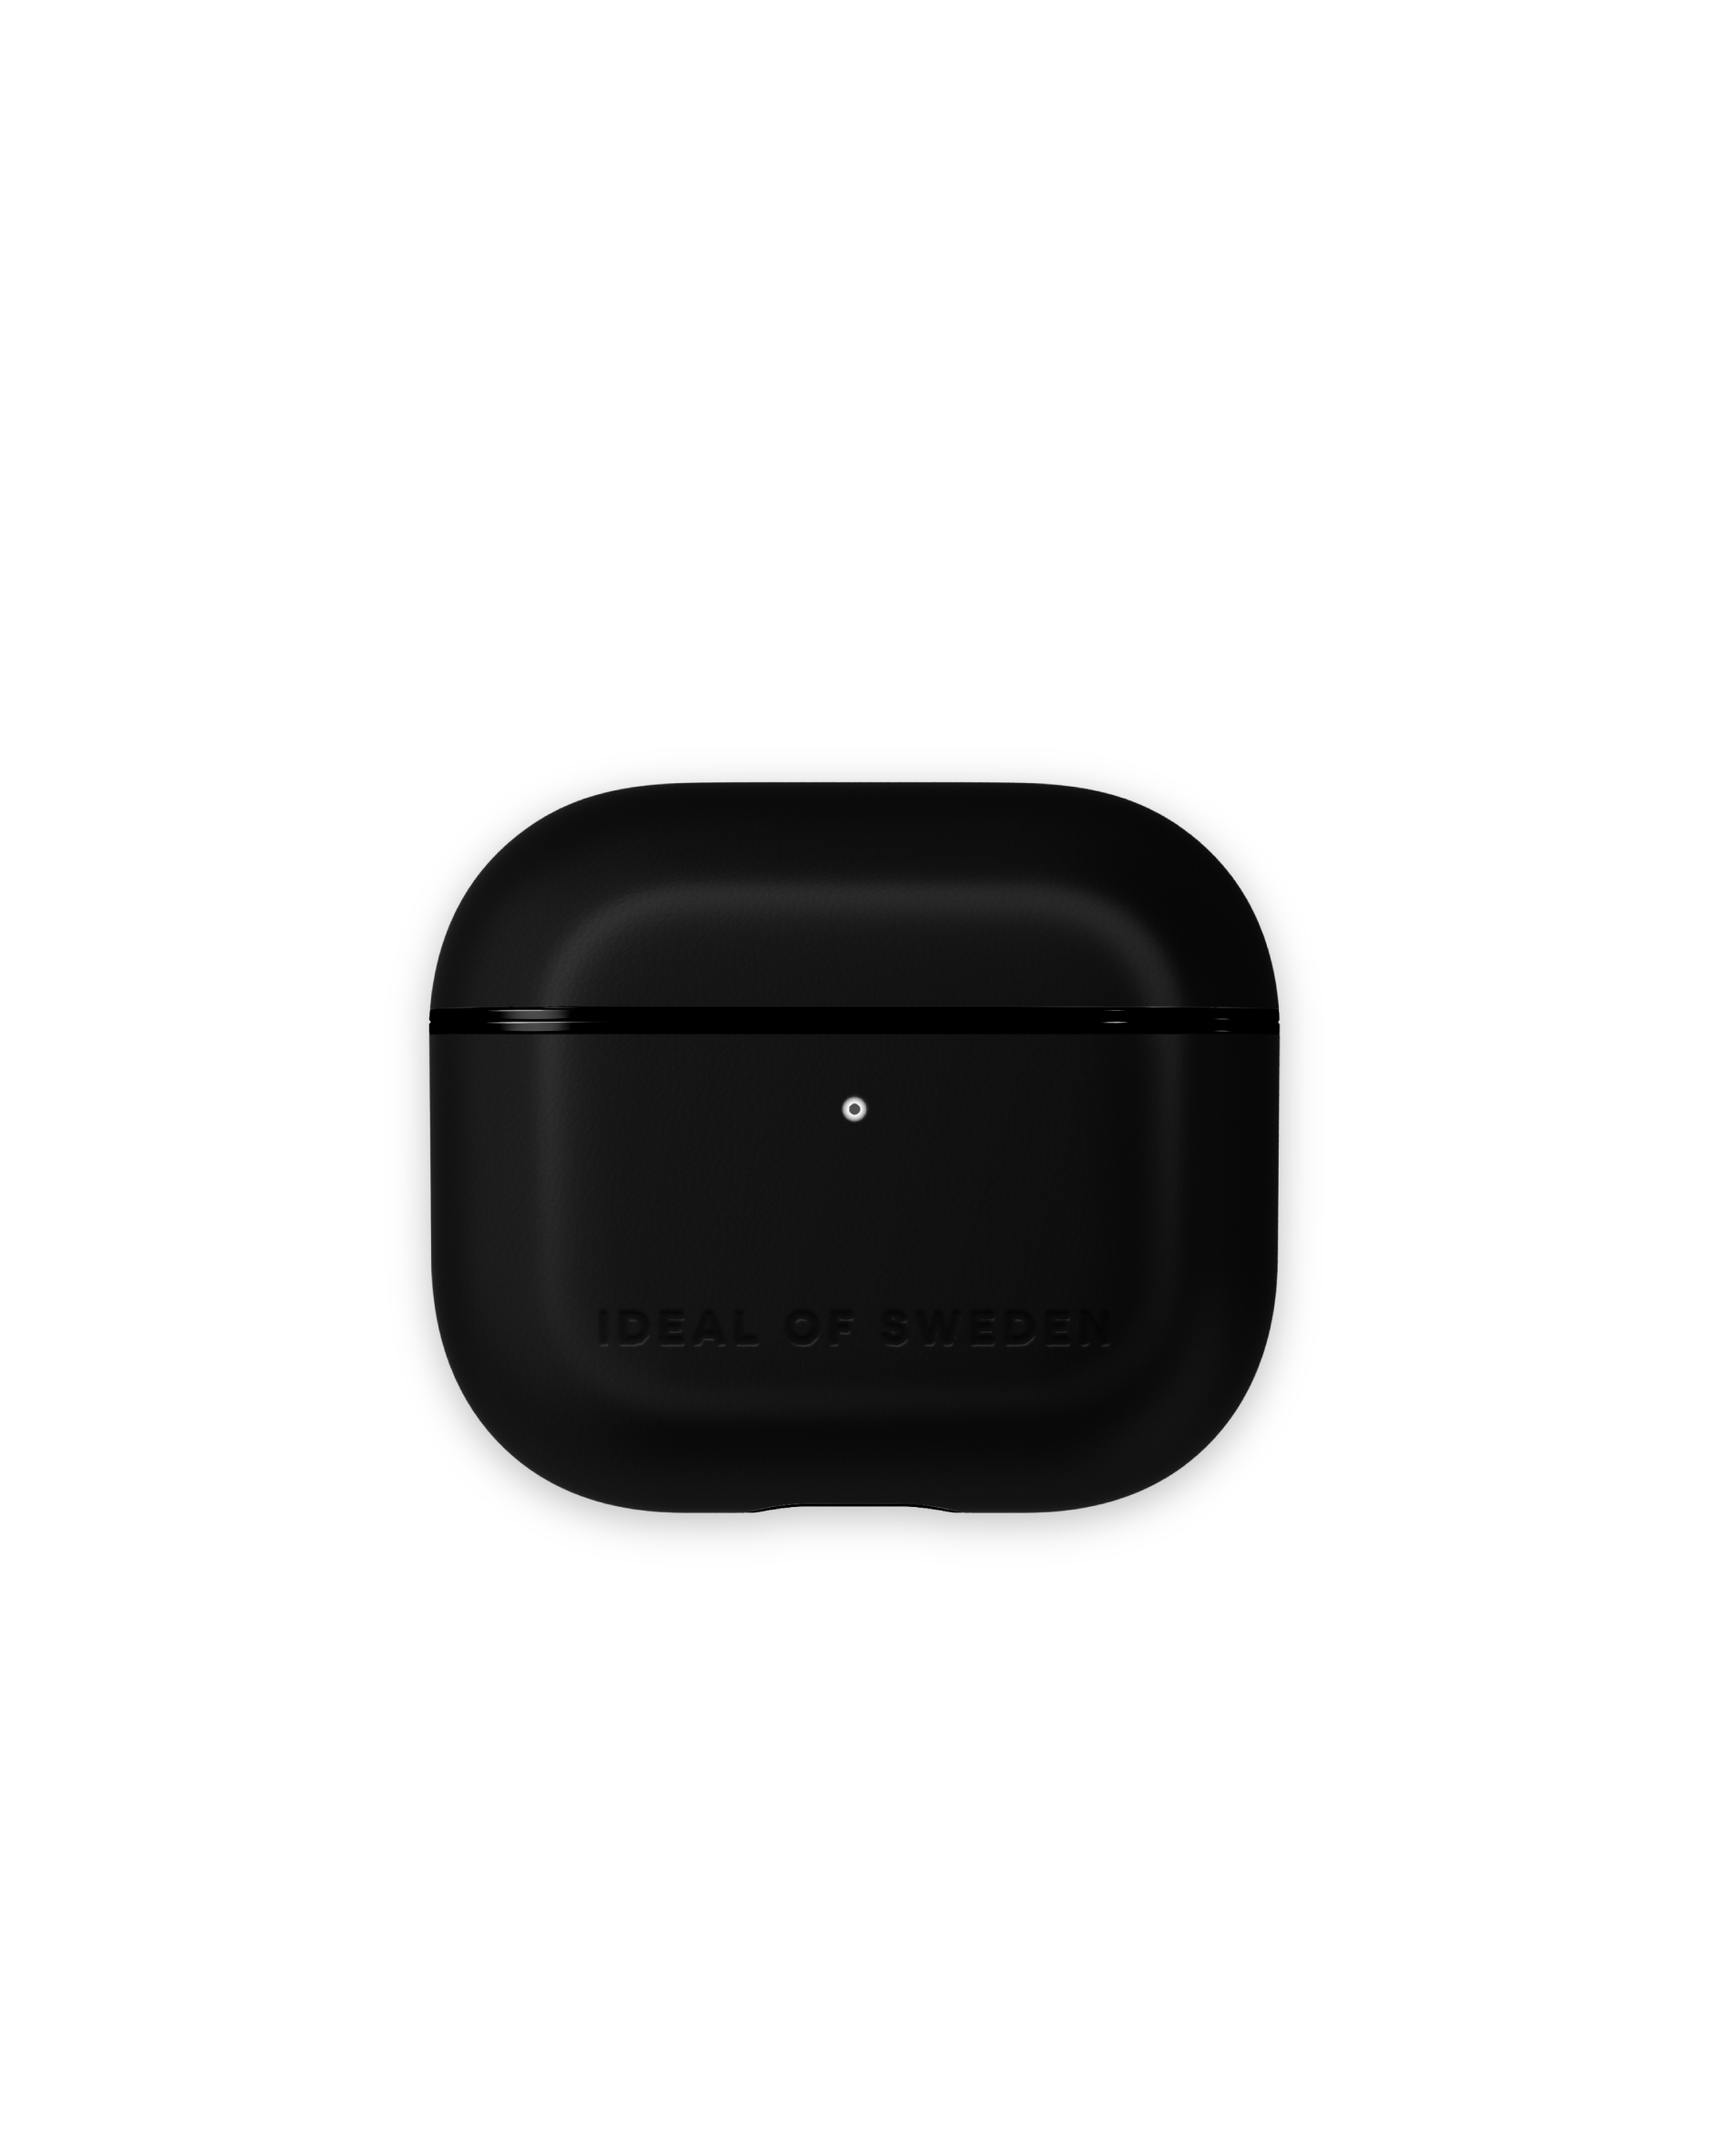 IDEAL OF SWEDEN IDAAPC-COM-G4-01 Black Apple für: AirPod passend CaseKopfhörer-Schutzhülle Como